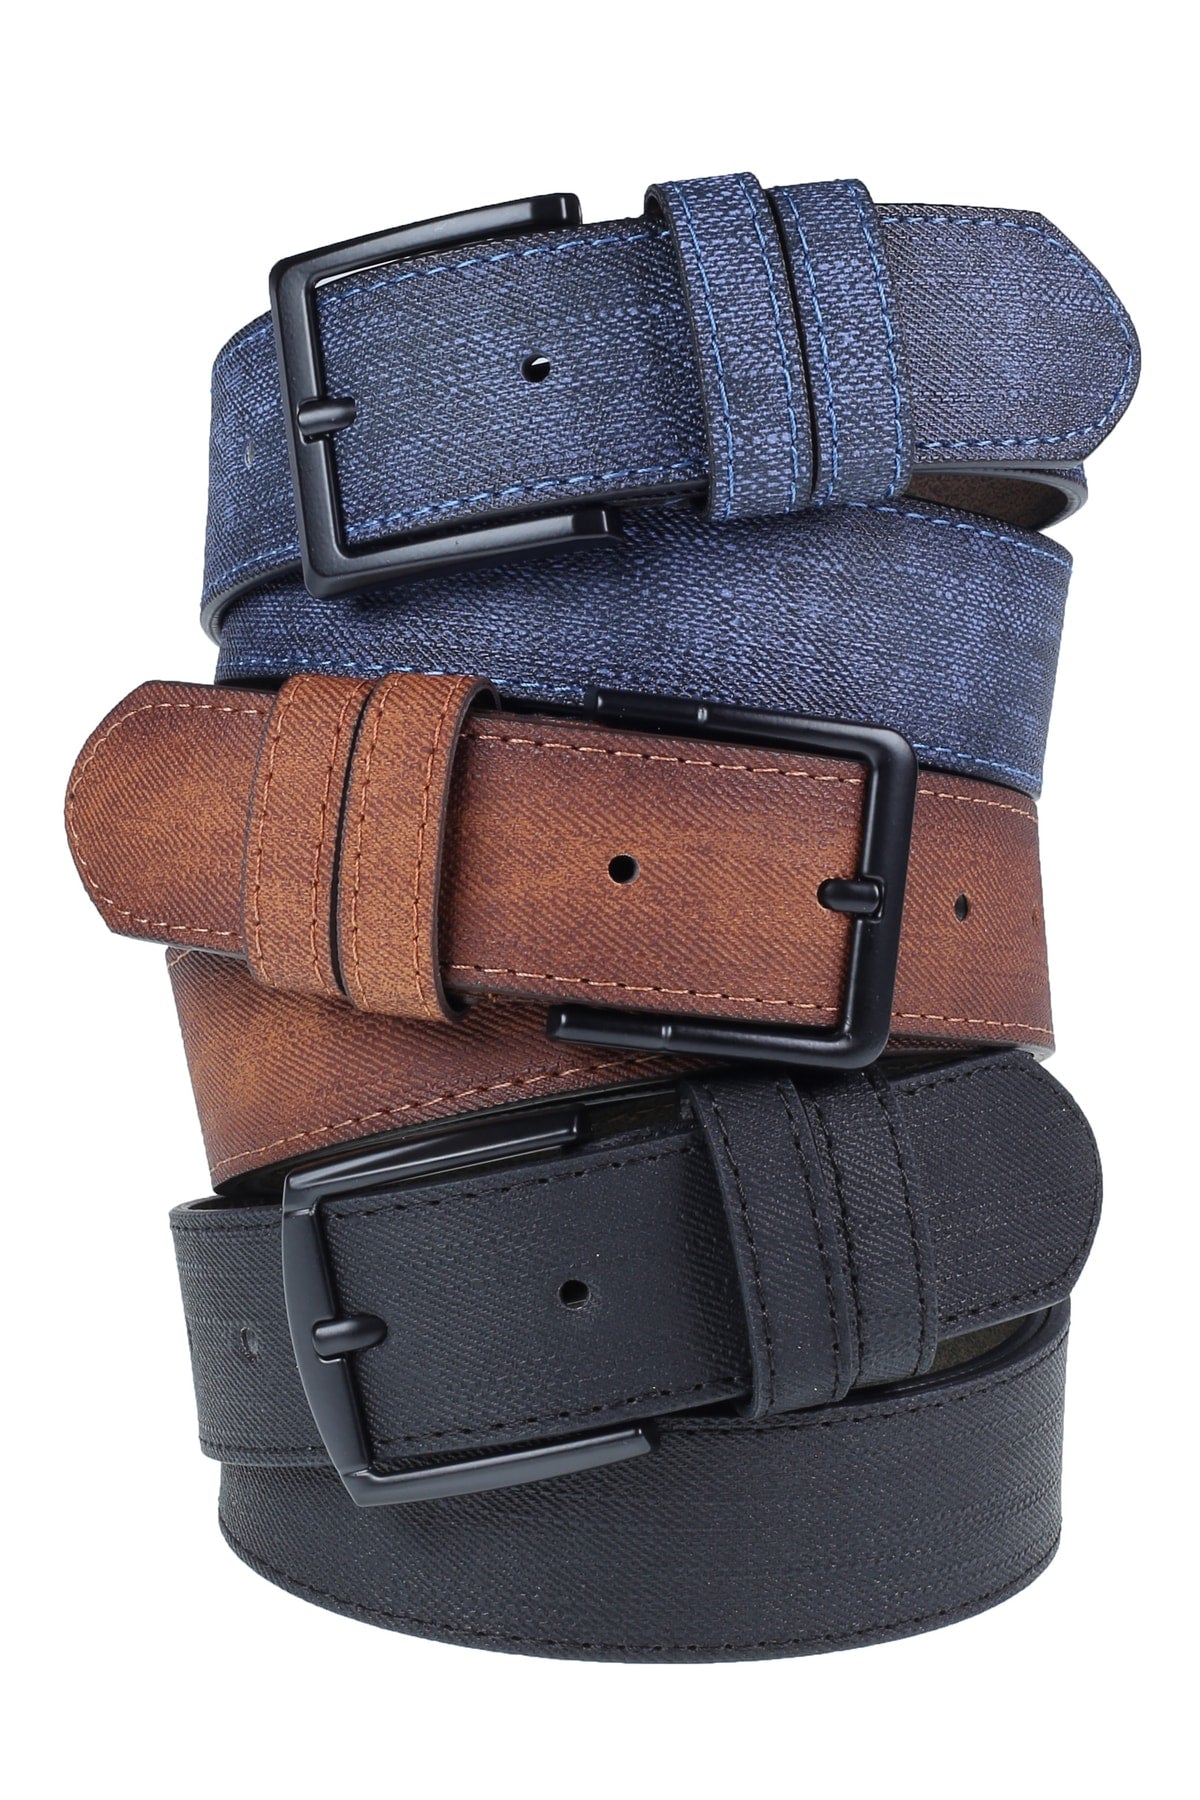 3 Pieces Men's Belt Suitable For Jeans And Canvas